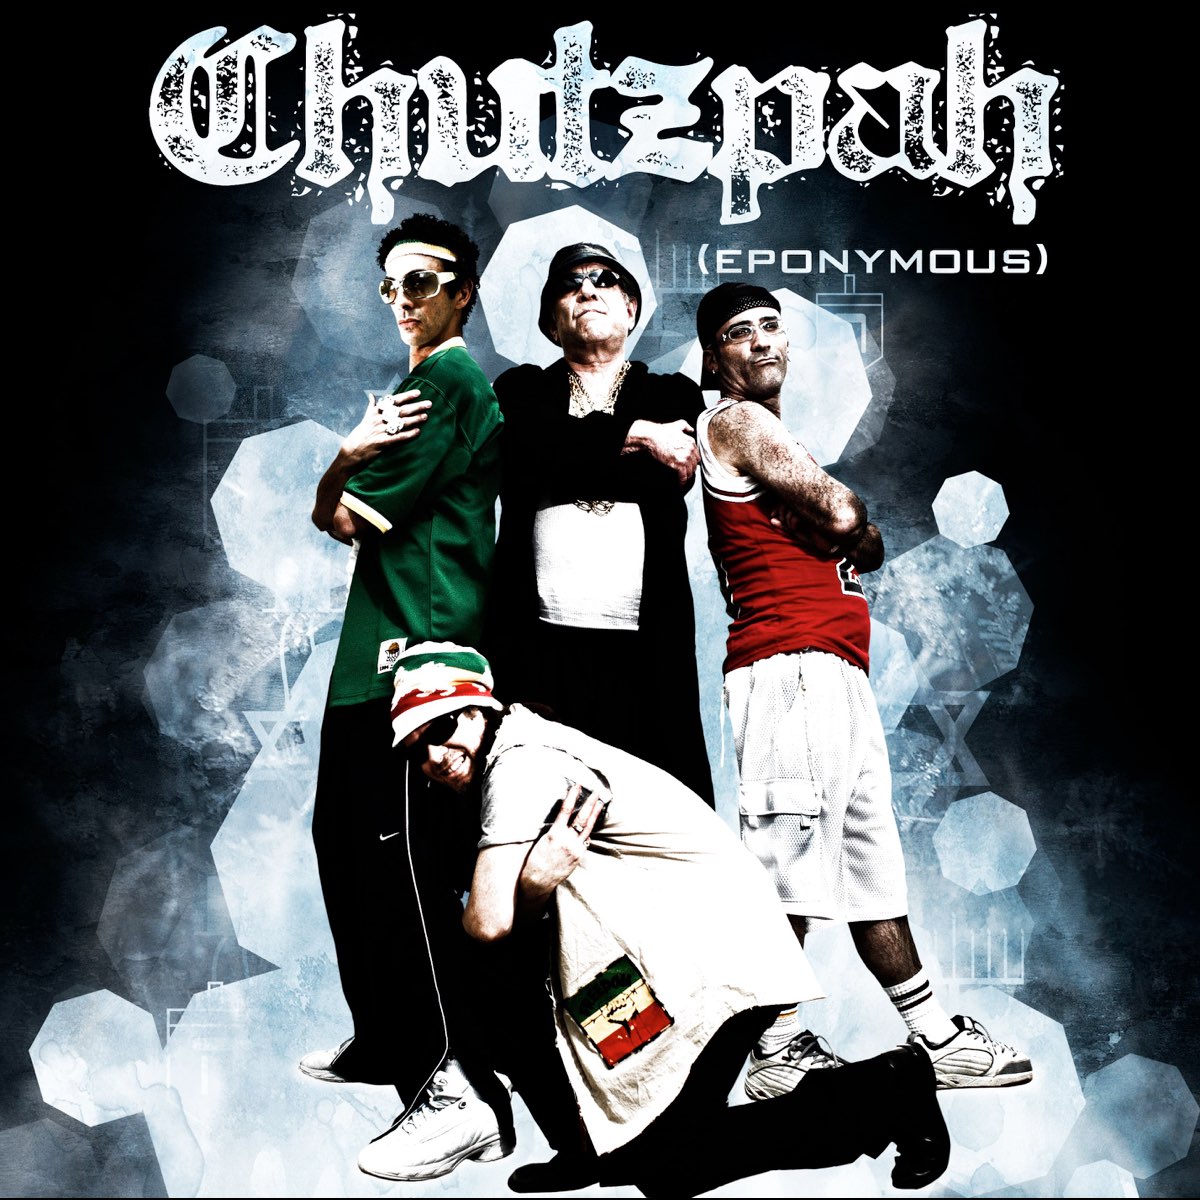 Chutzpah - Eponymous - Album by Chutzpah - Apple Music